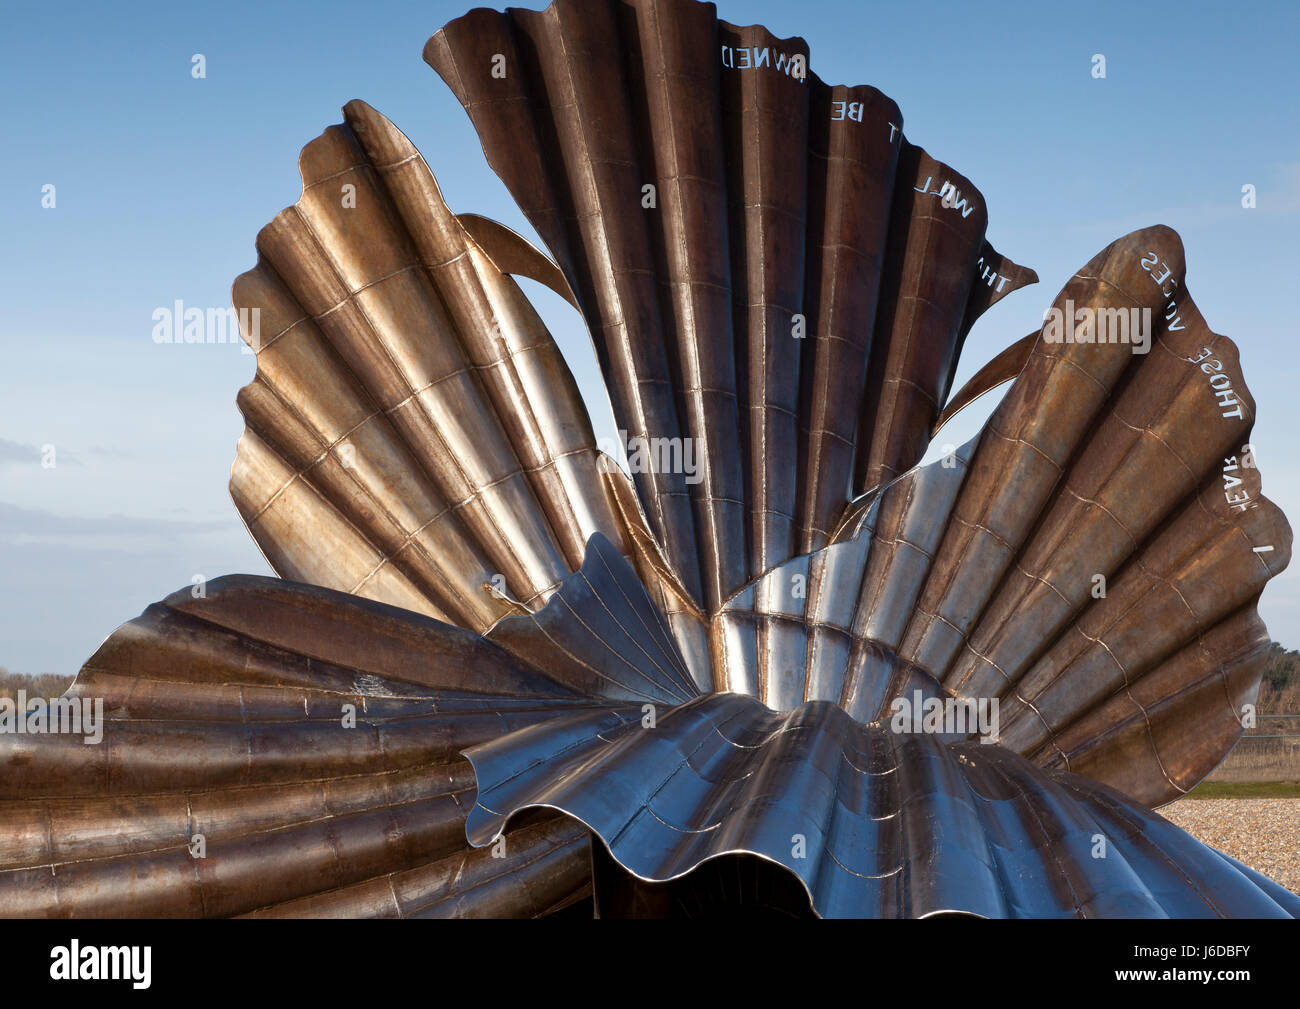 Scallop shell sculpture, Aldeburgh Beach, Suffolk, UK Stock Photo